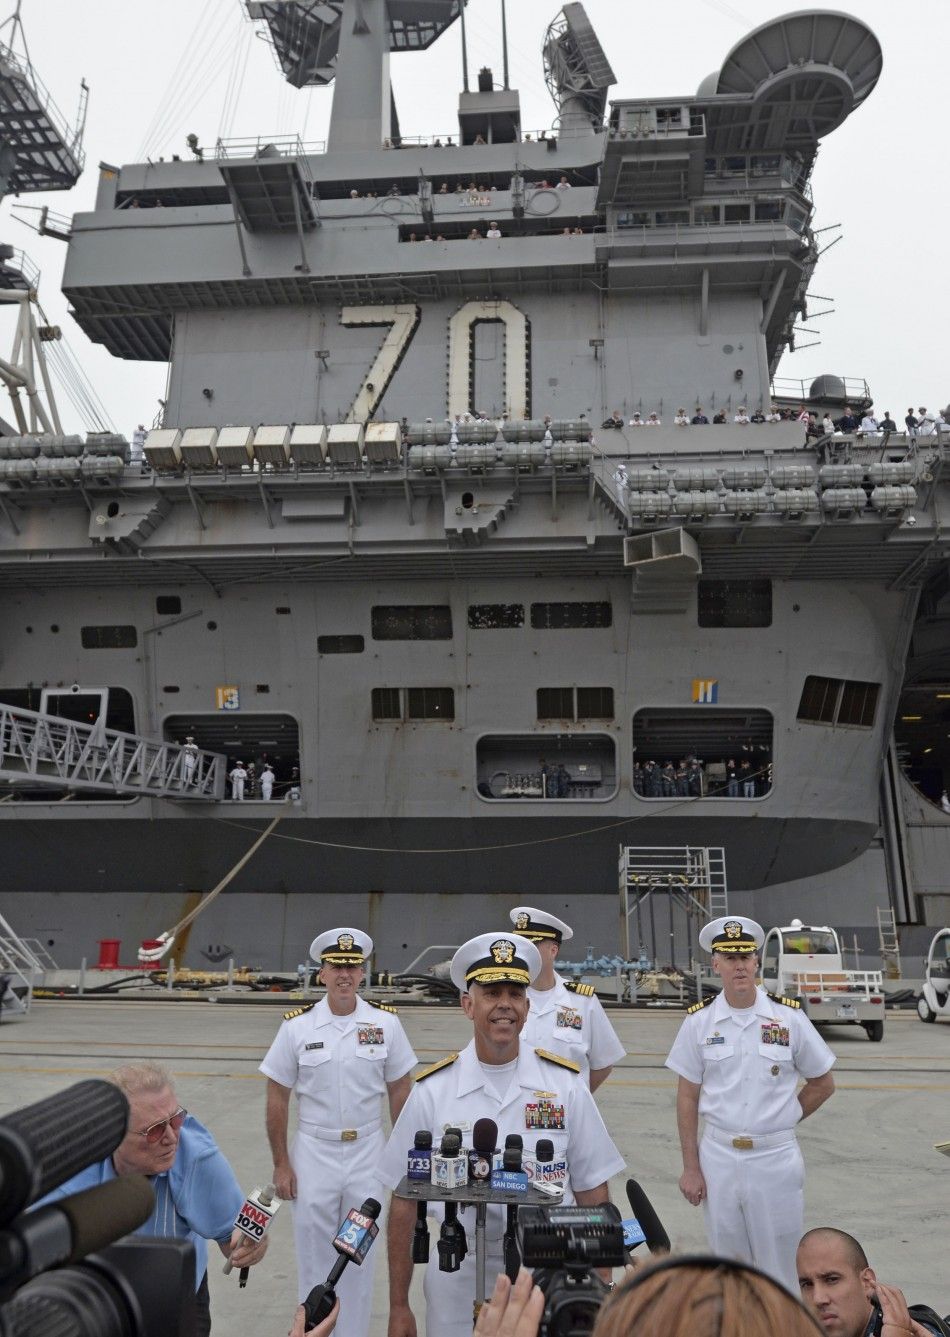 College Basketball on the deck of Bin Laden buriel warship